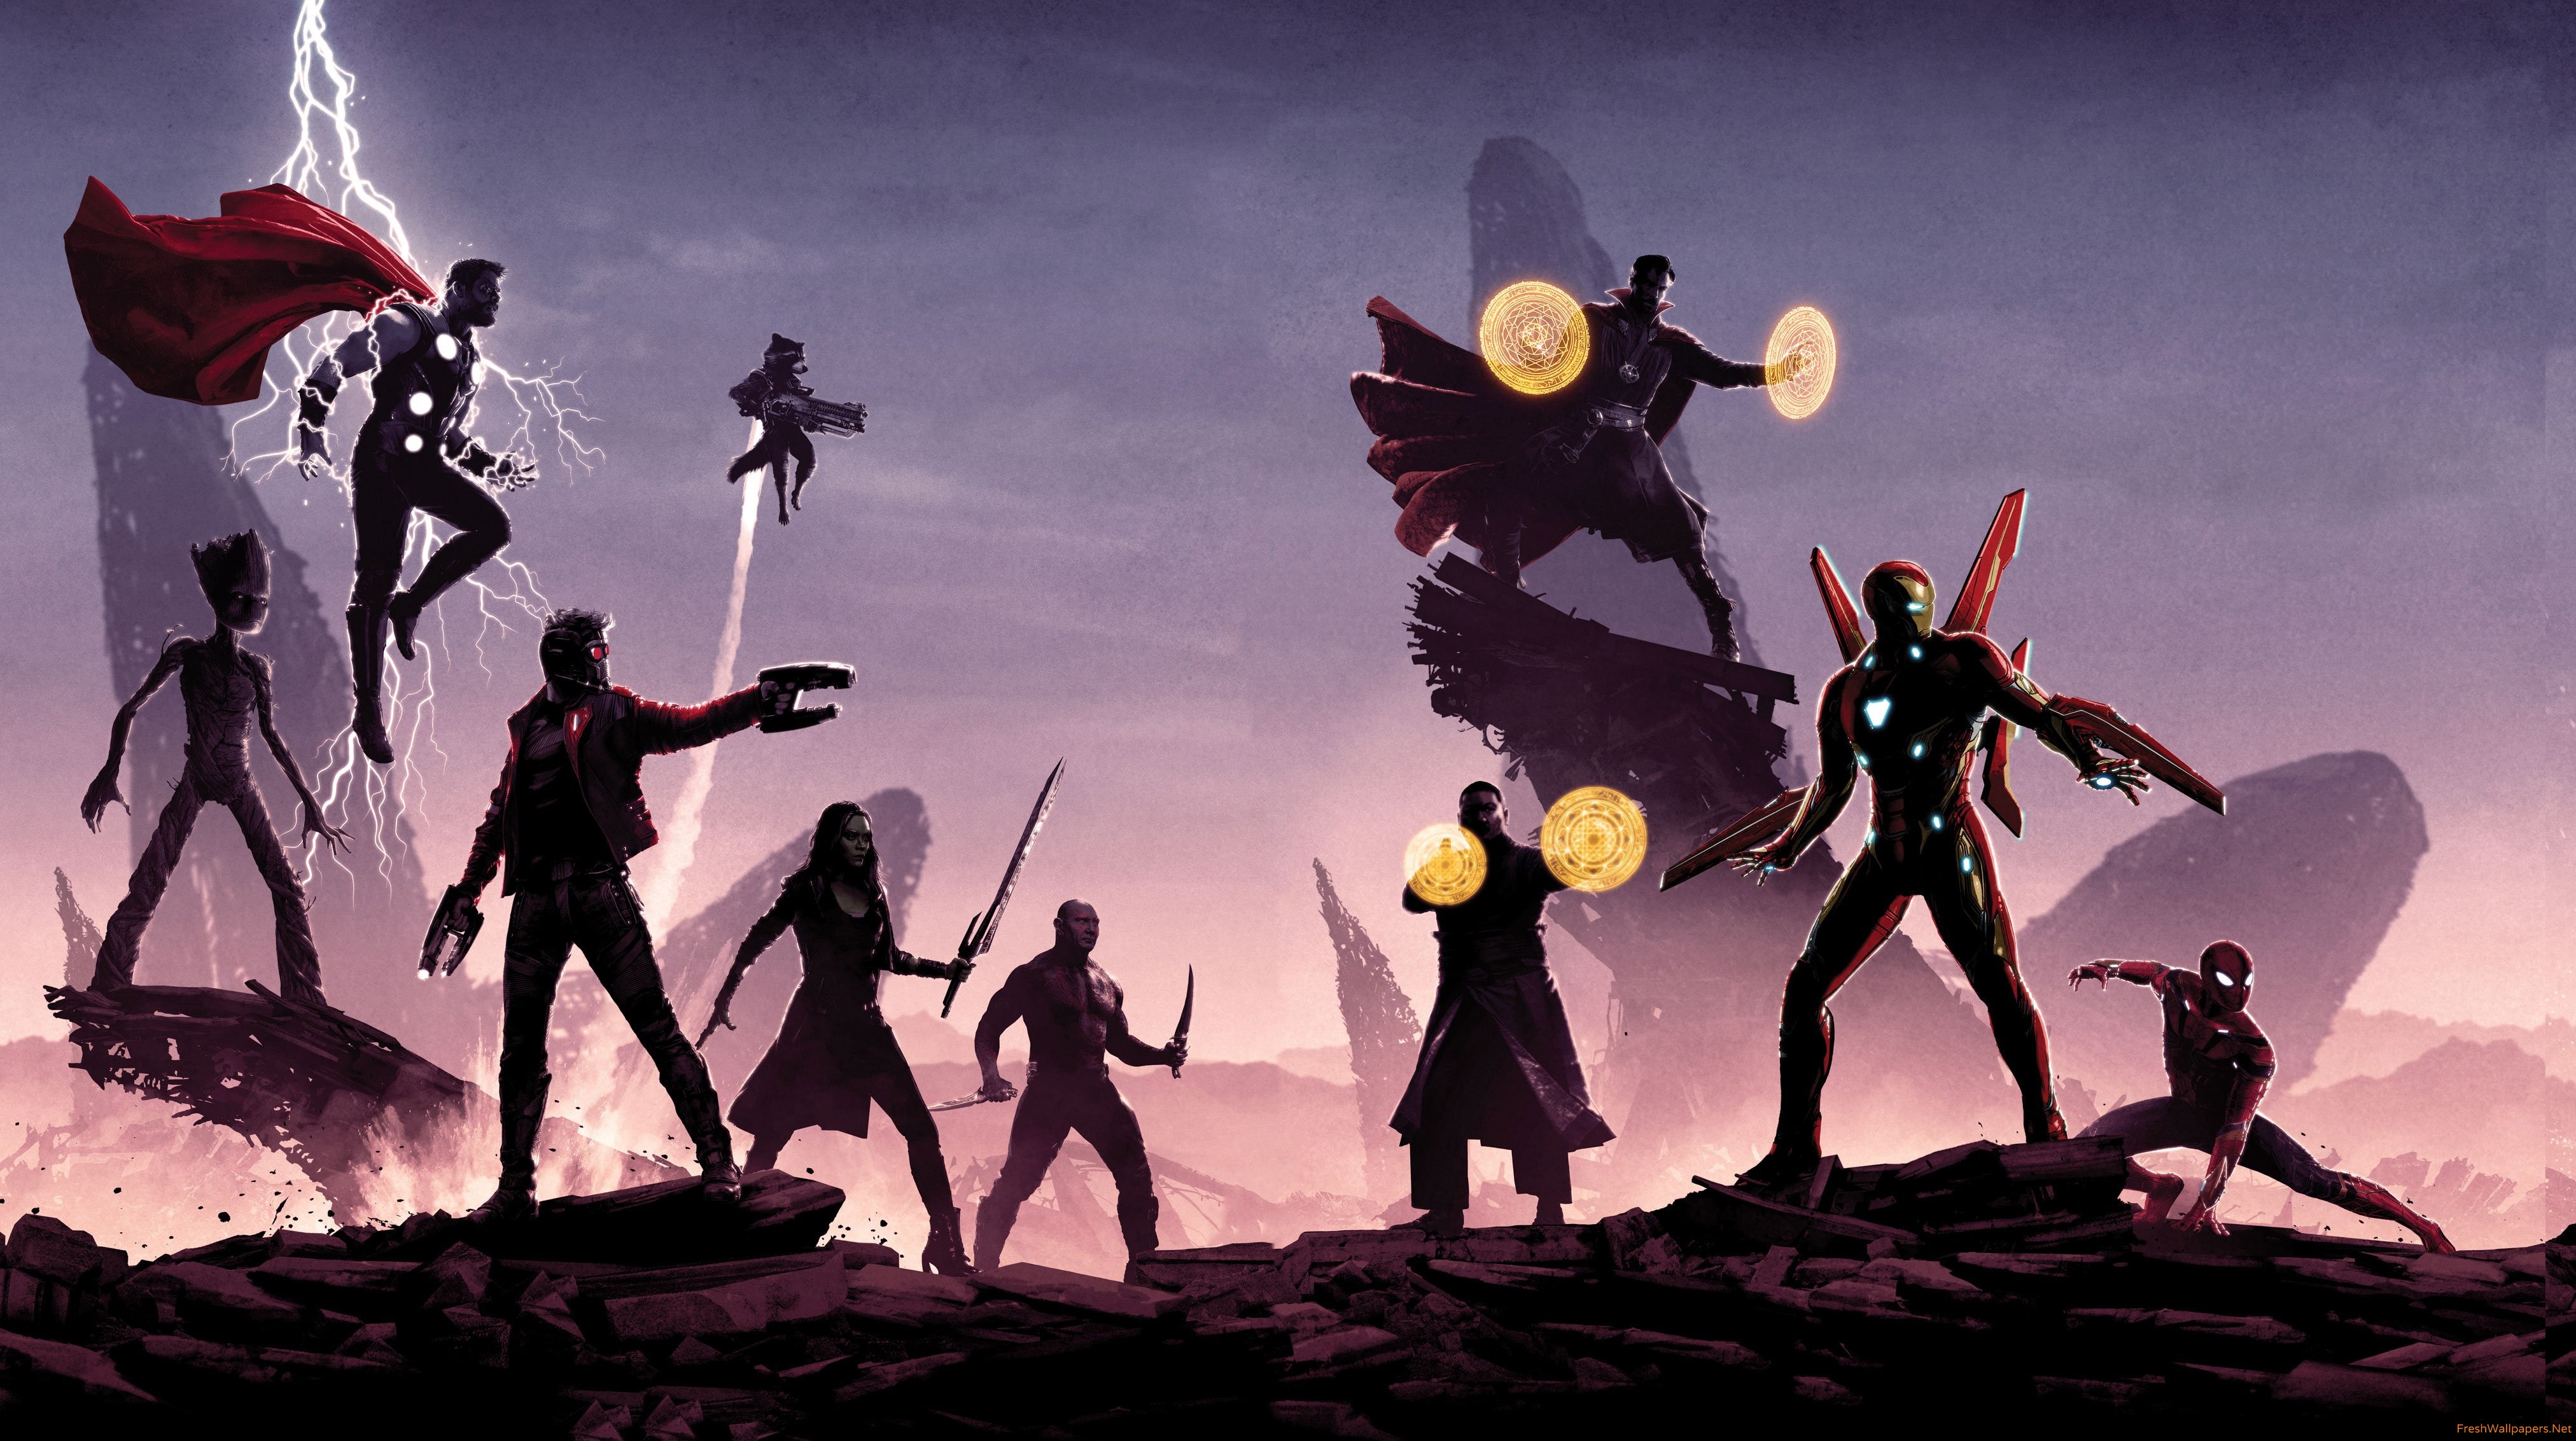 Avengers Infinity War Fandango Poster Wallpapers